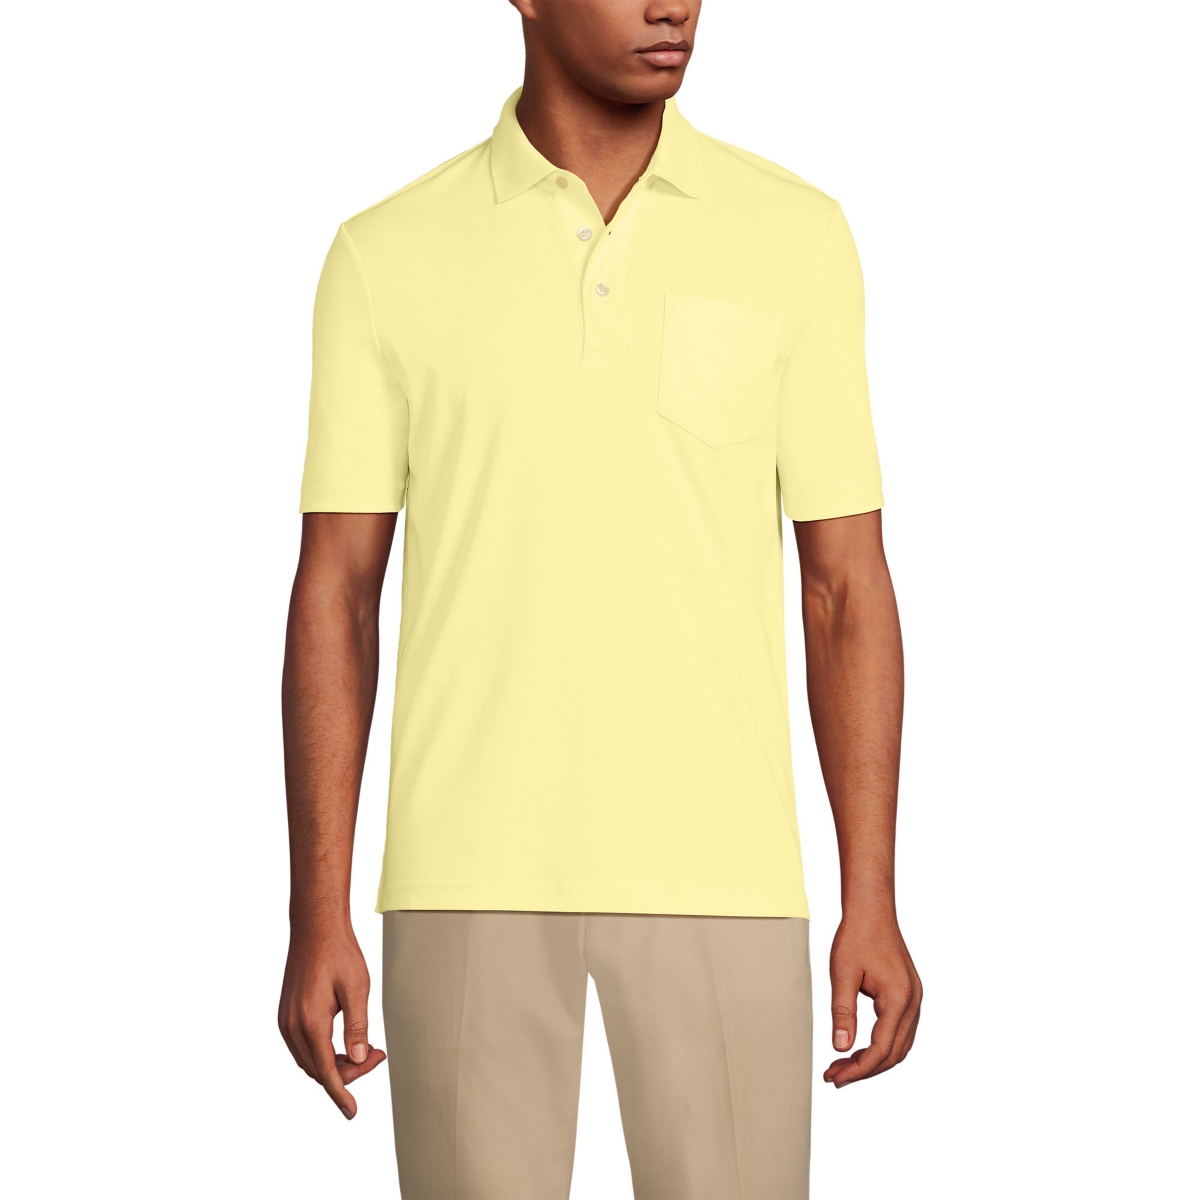 Men's Short Sleeve Cotton Supima Polo Shirt with Pocket - Faint lemon